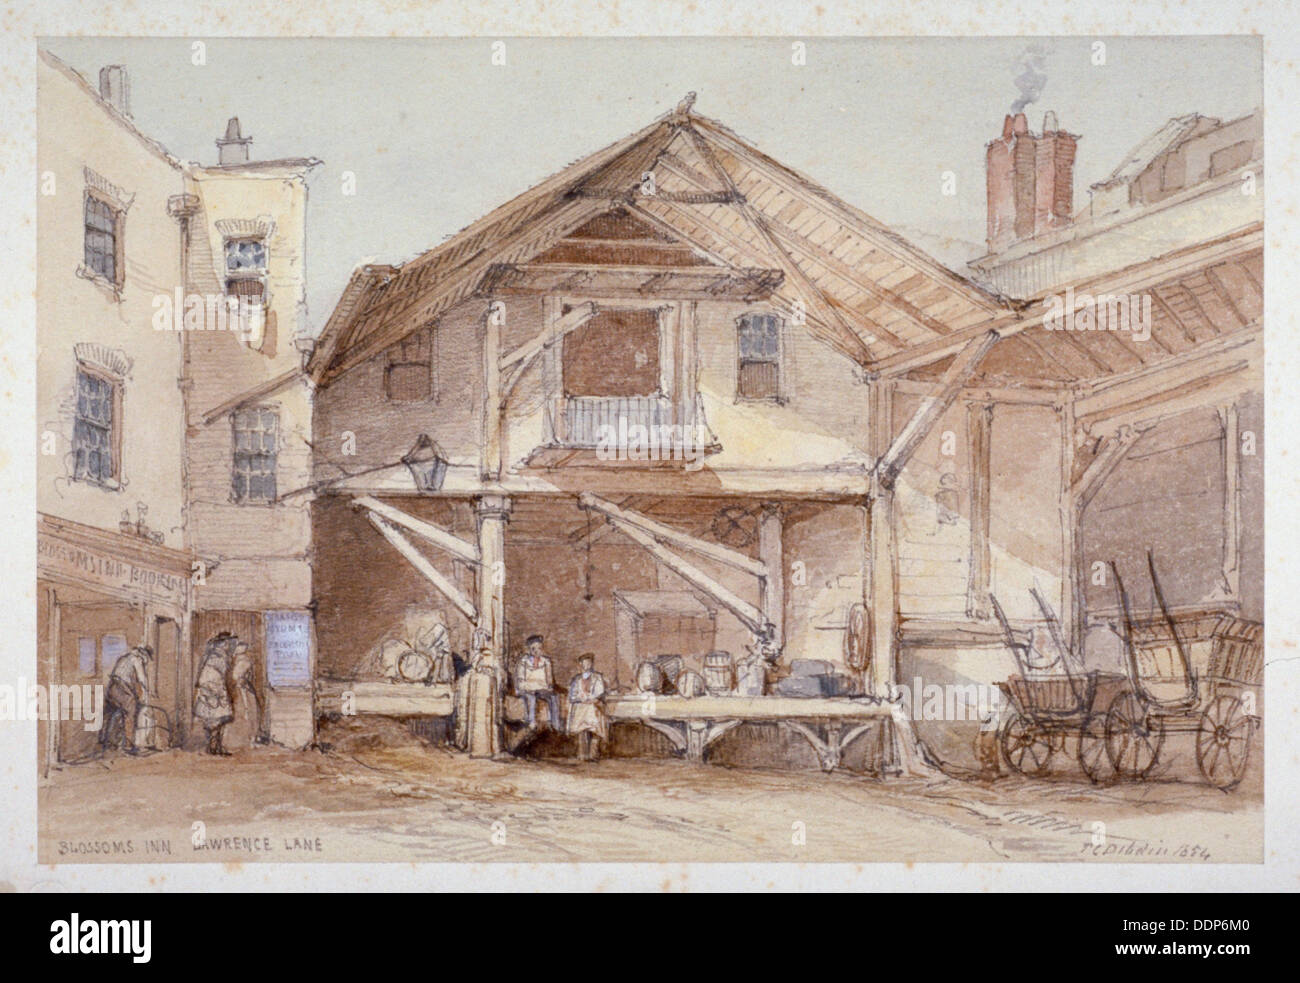 Blossoms Inn, Lawrence Lane, Città di Londra, 1854. Artista: Thomas Colman Dibdin Foto Stock